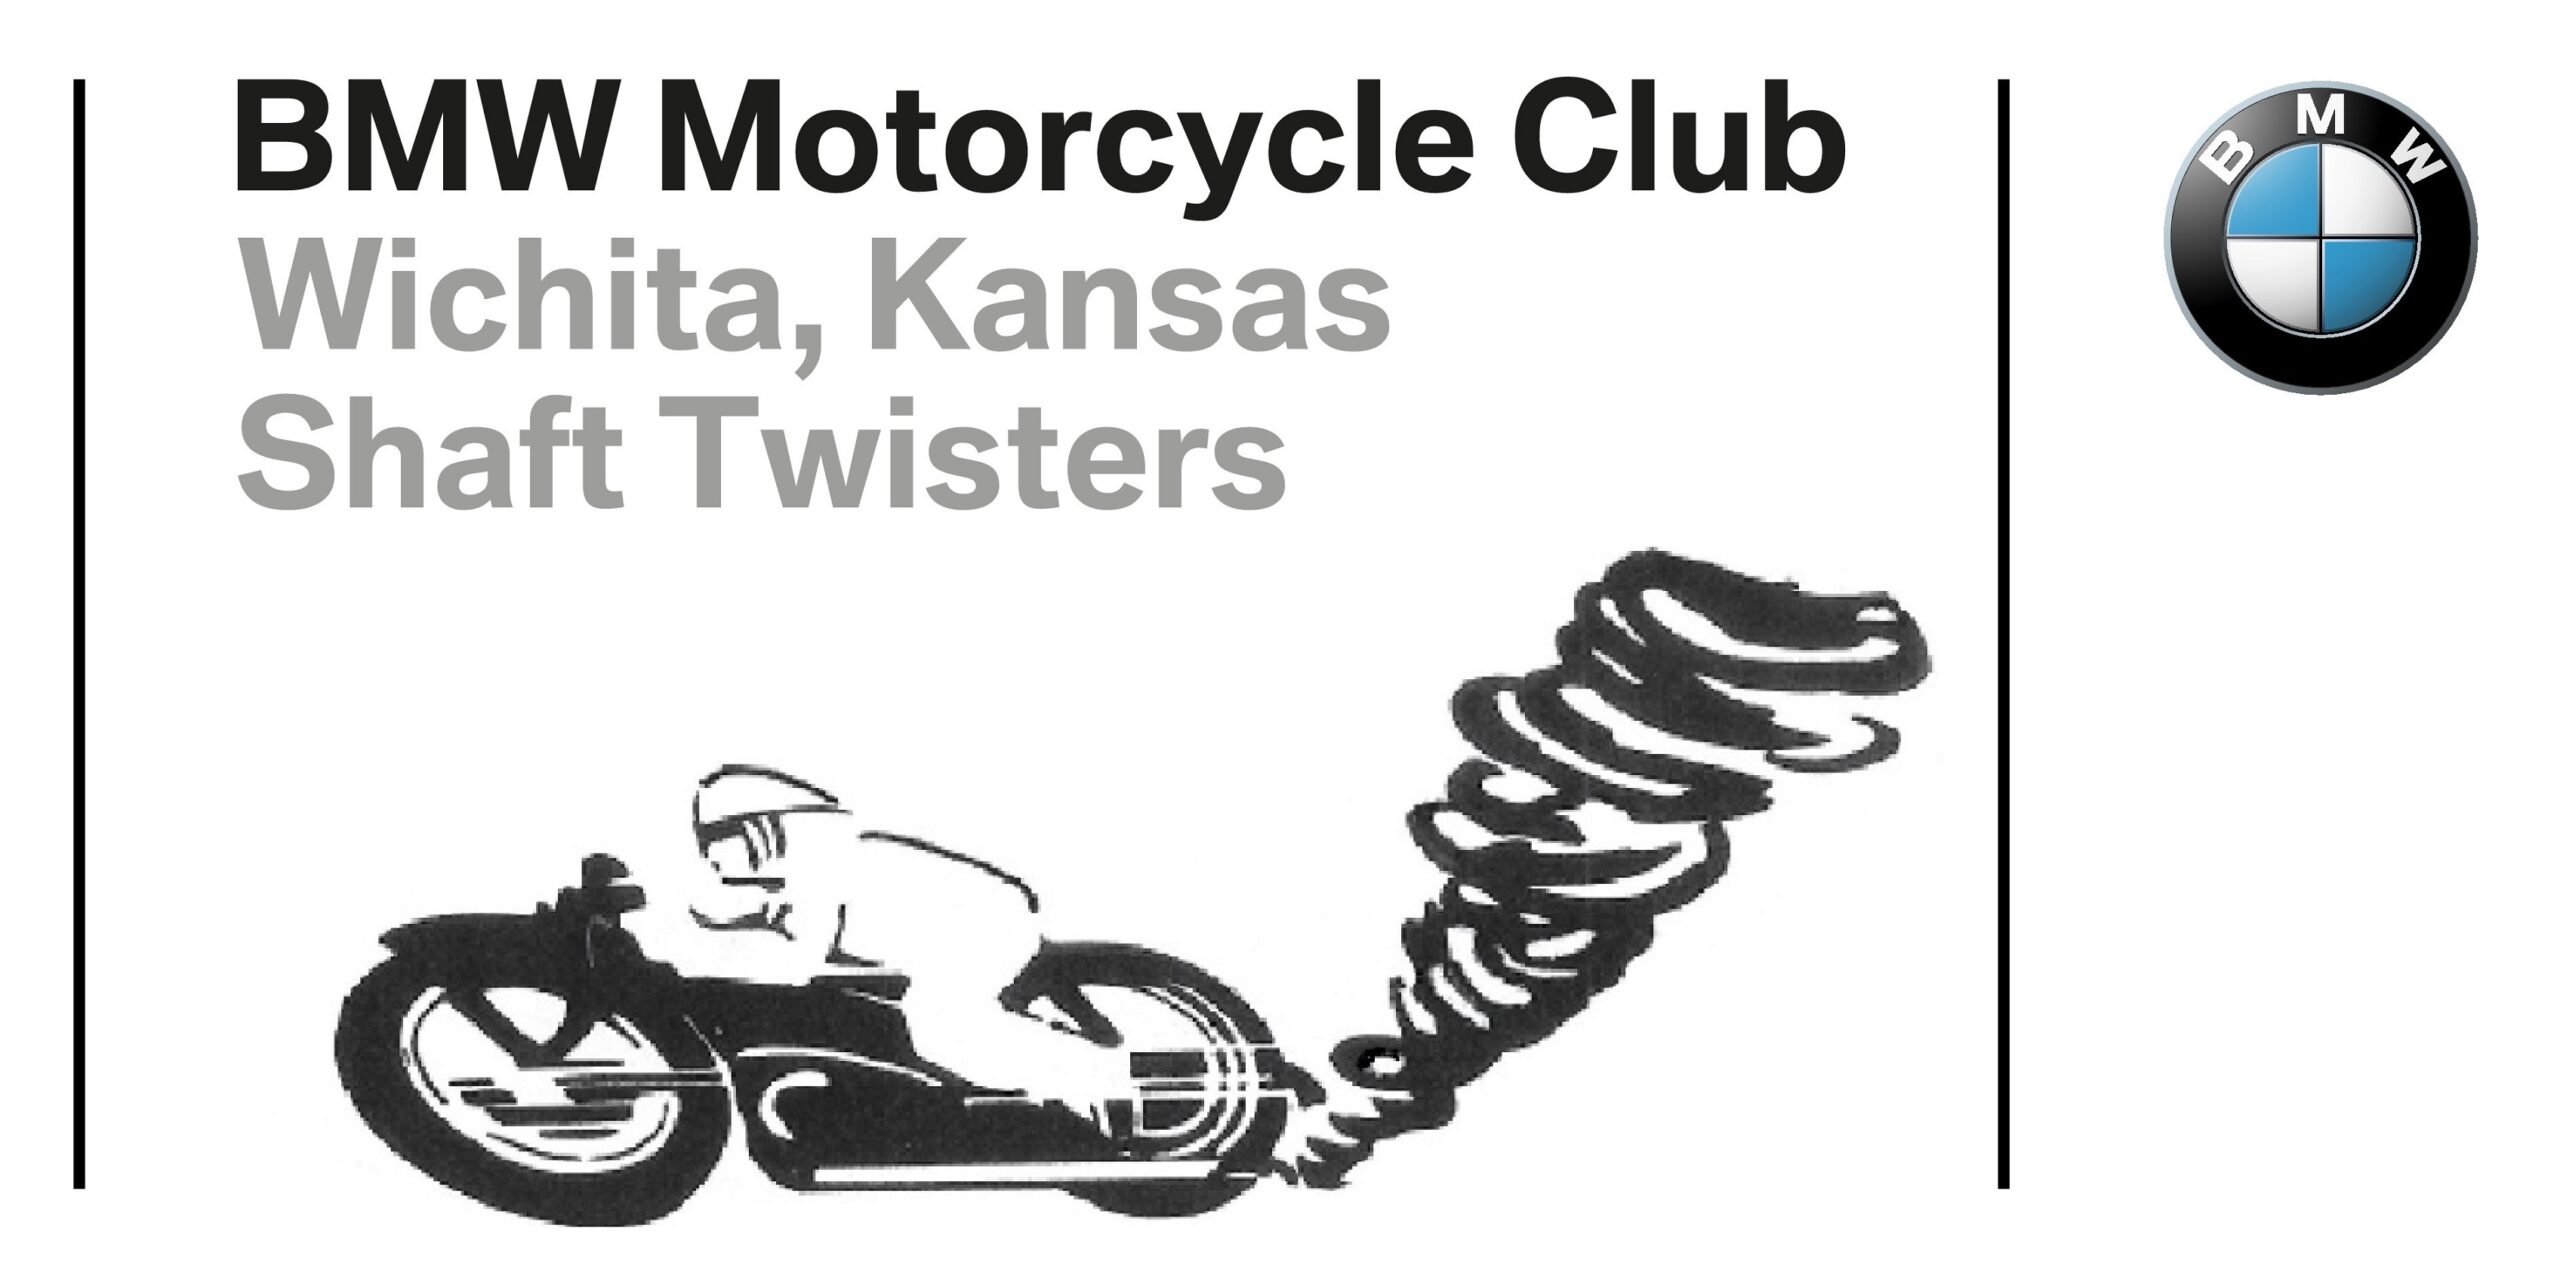 Shaft Twisters   BMW Motorcycle Club